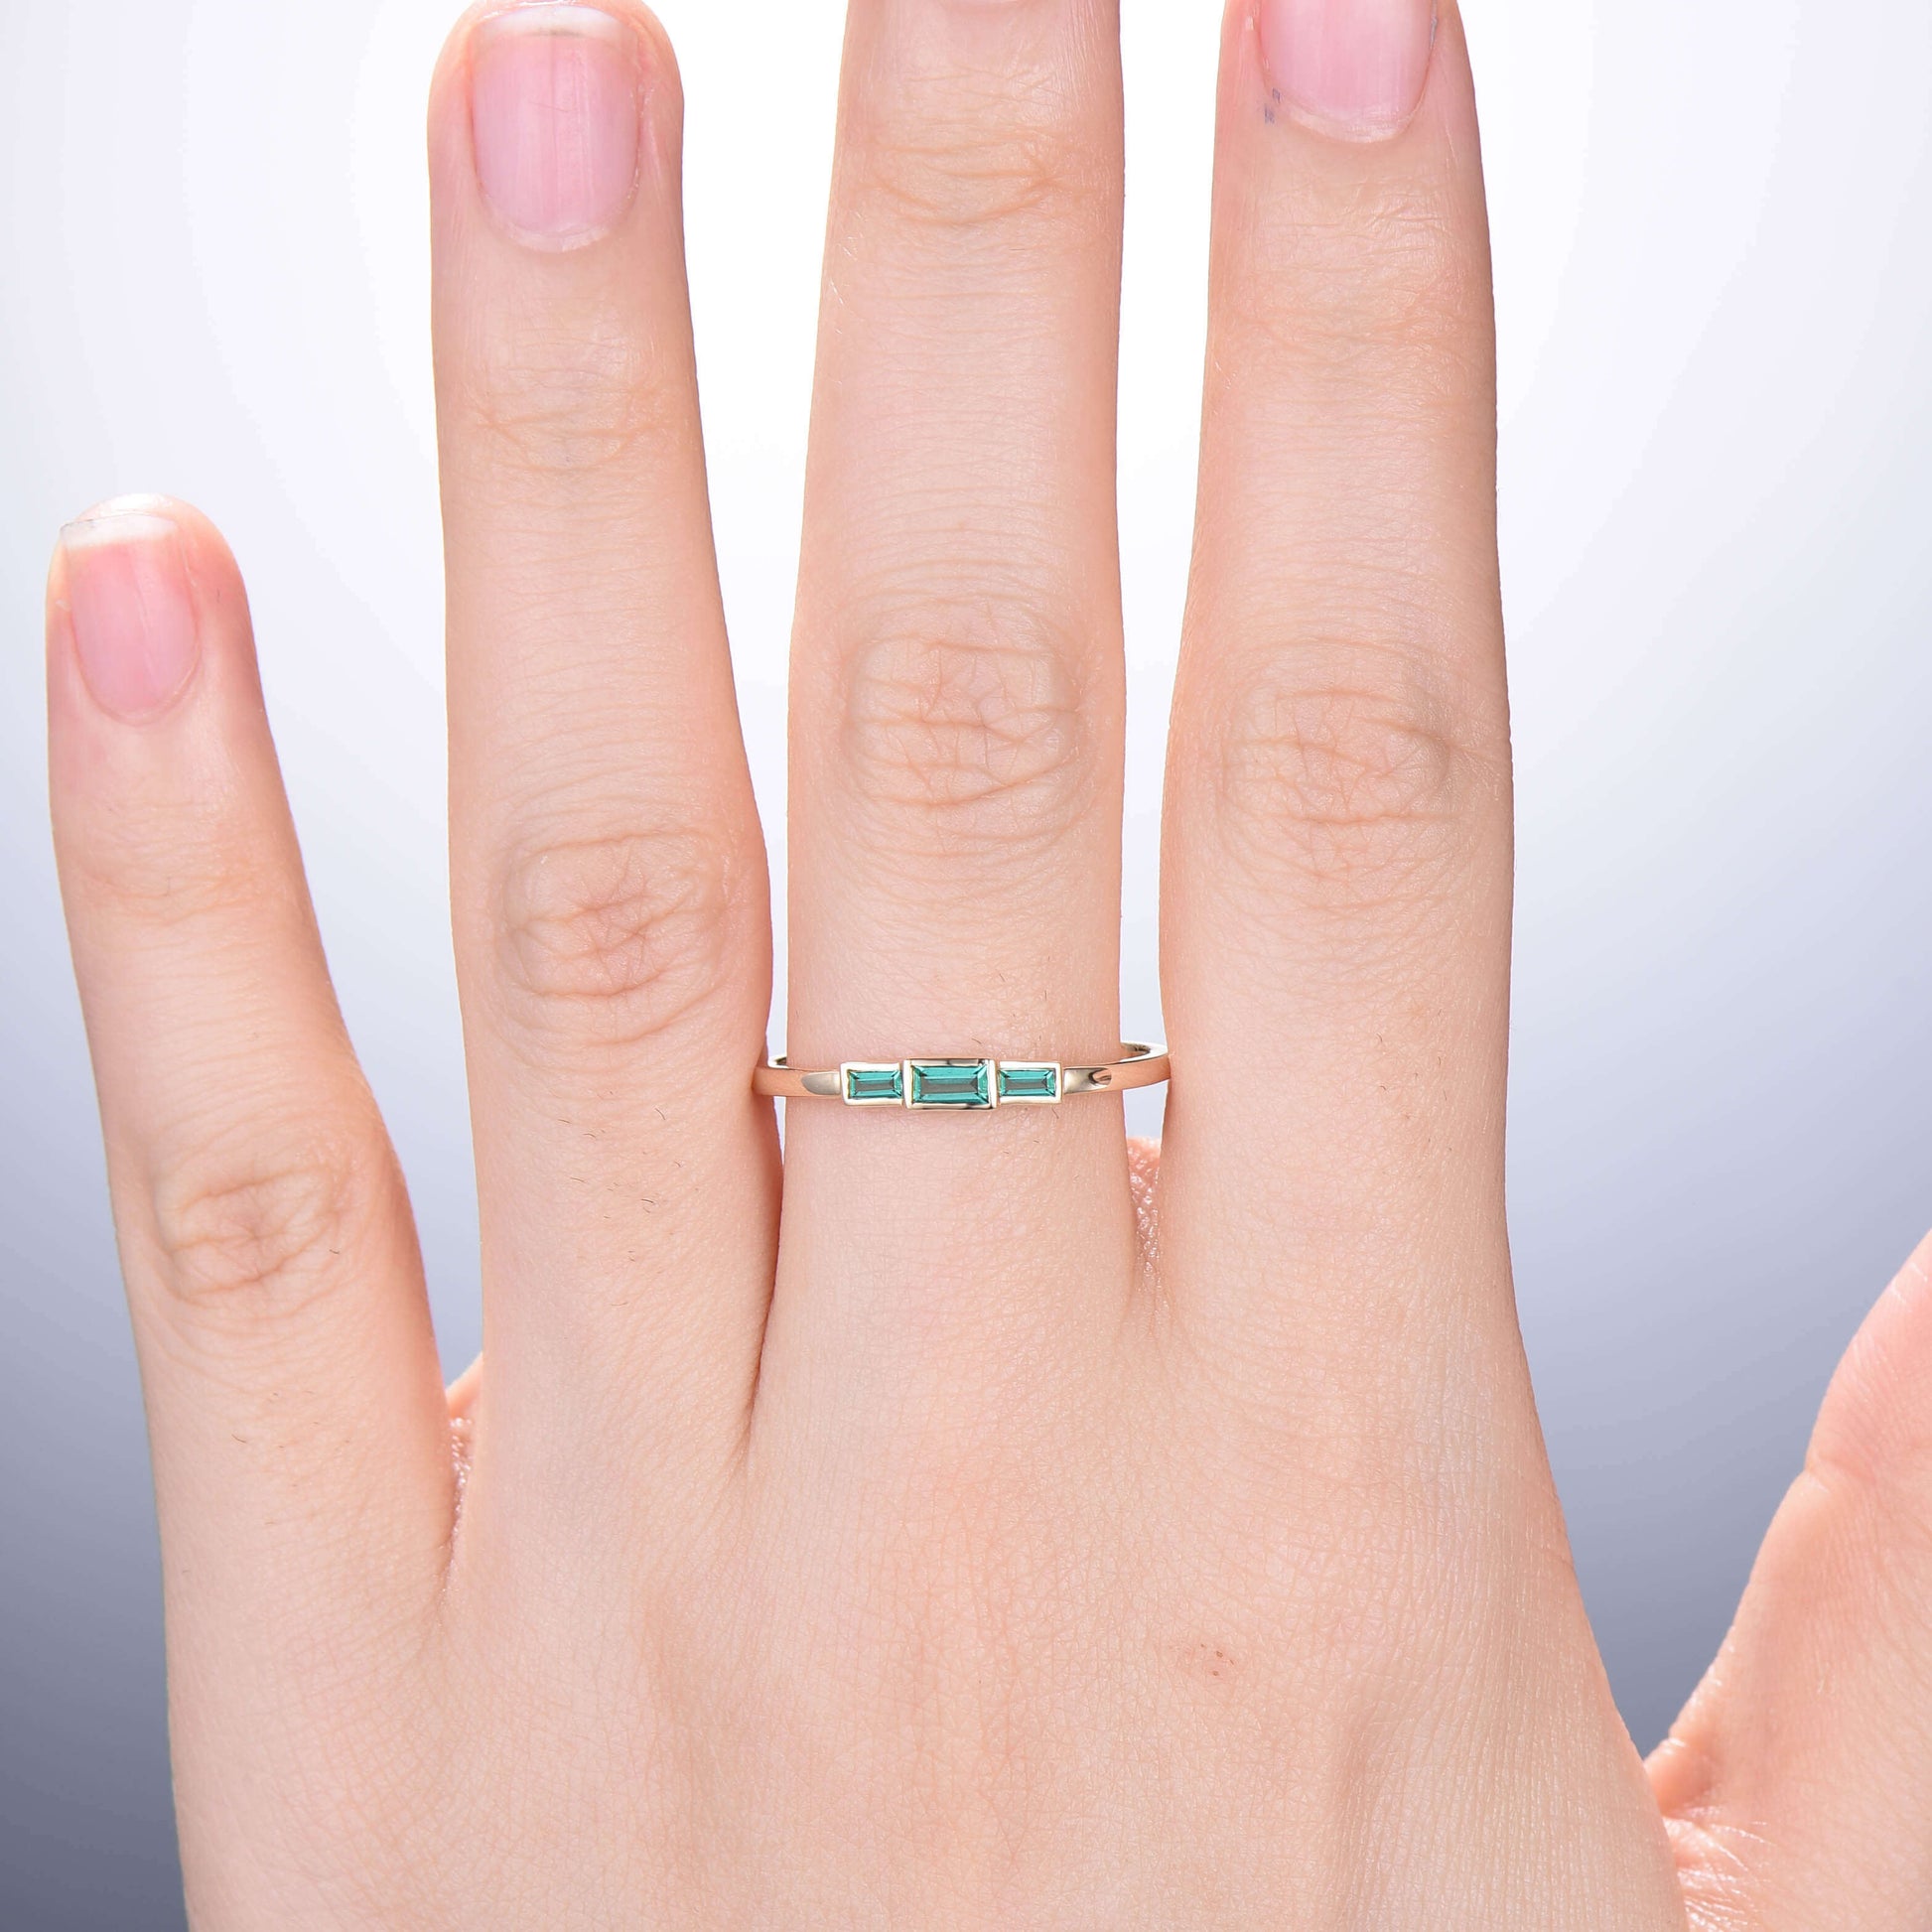 Bezel Set Baguette Emerald Wedding Ring Three Stone Green Gemstone Promise Ring Minimalist Stacking Dainty Ring Birthstone Anniversary Gift - PENFINE